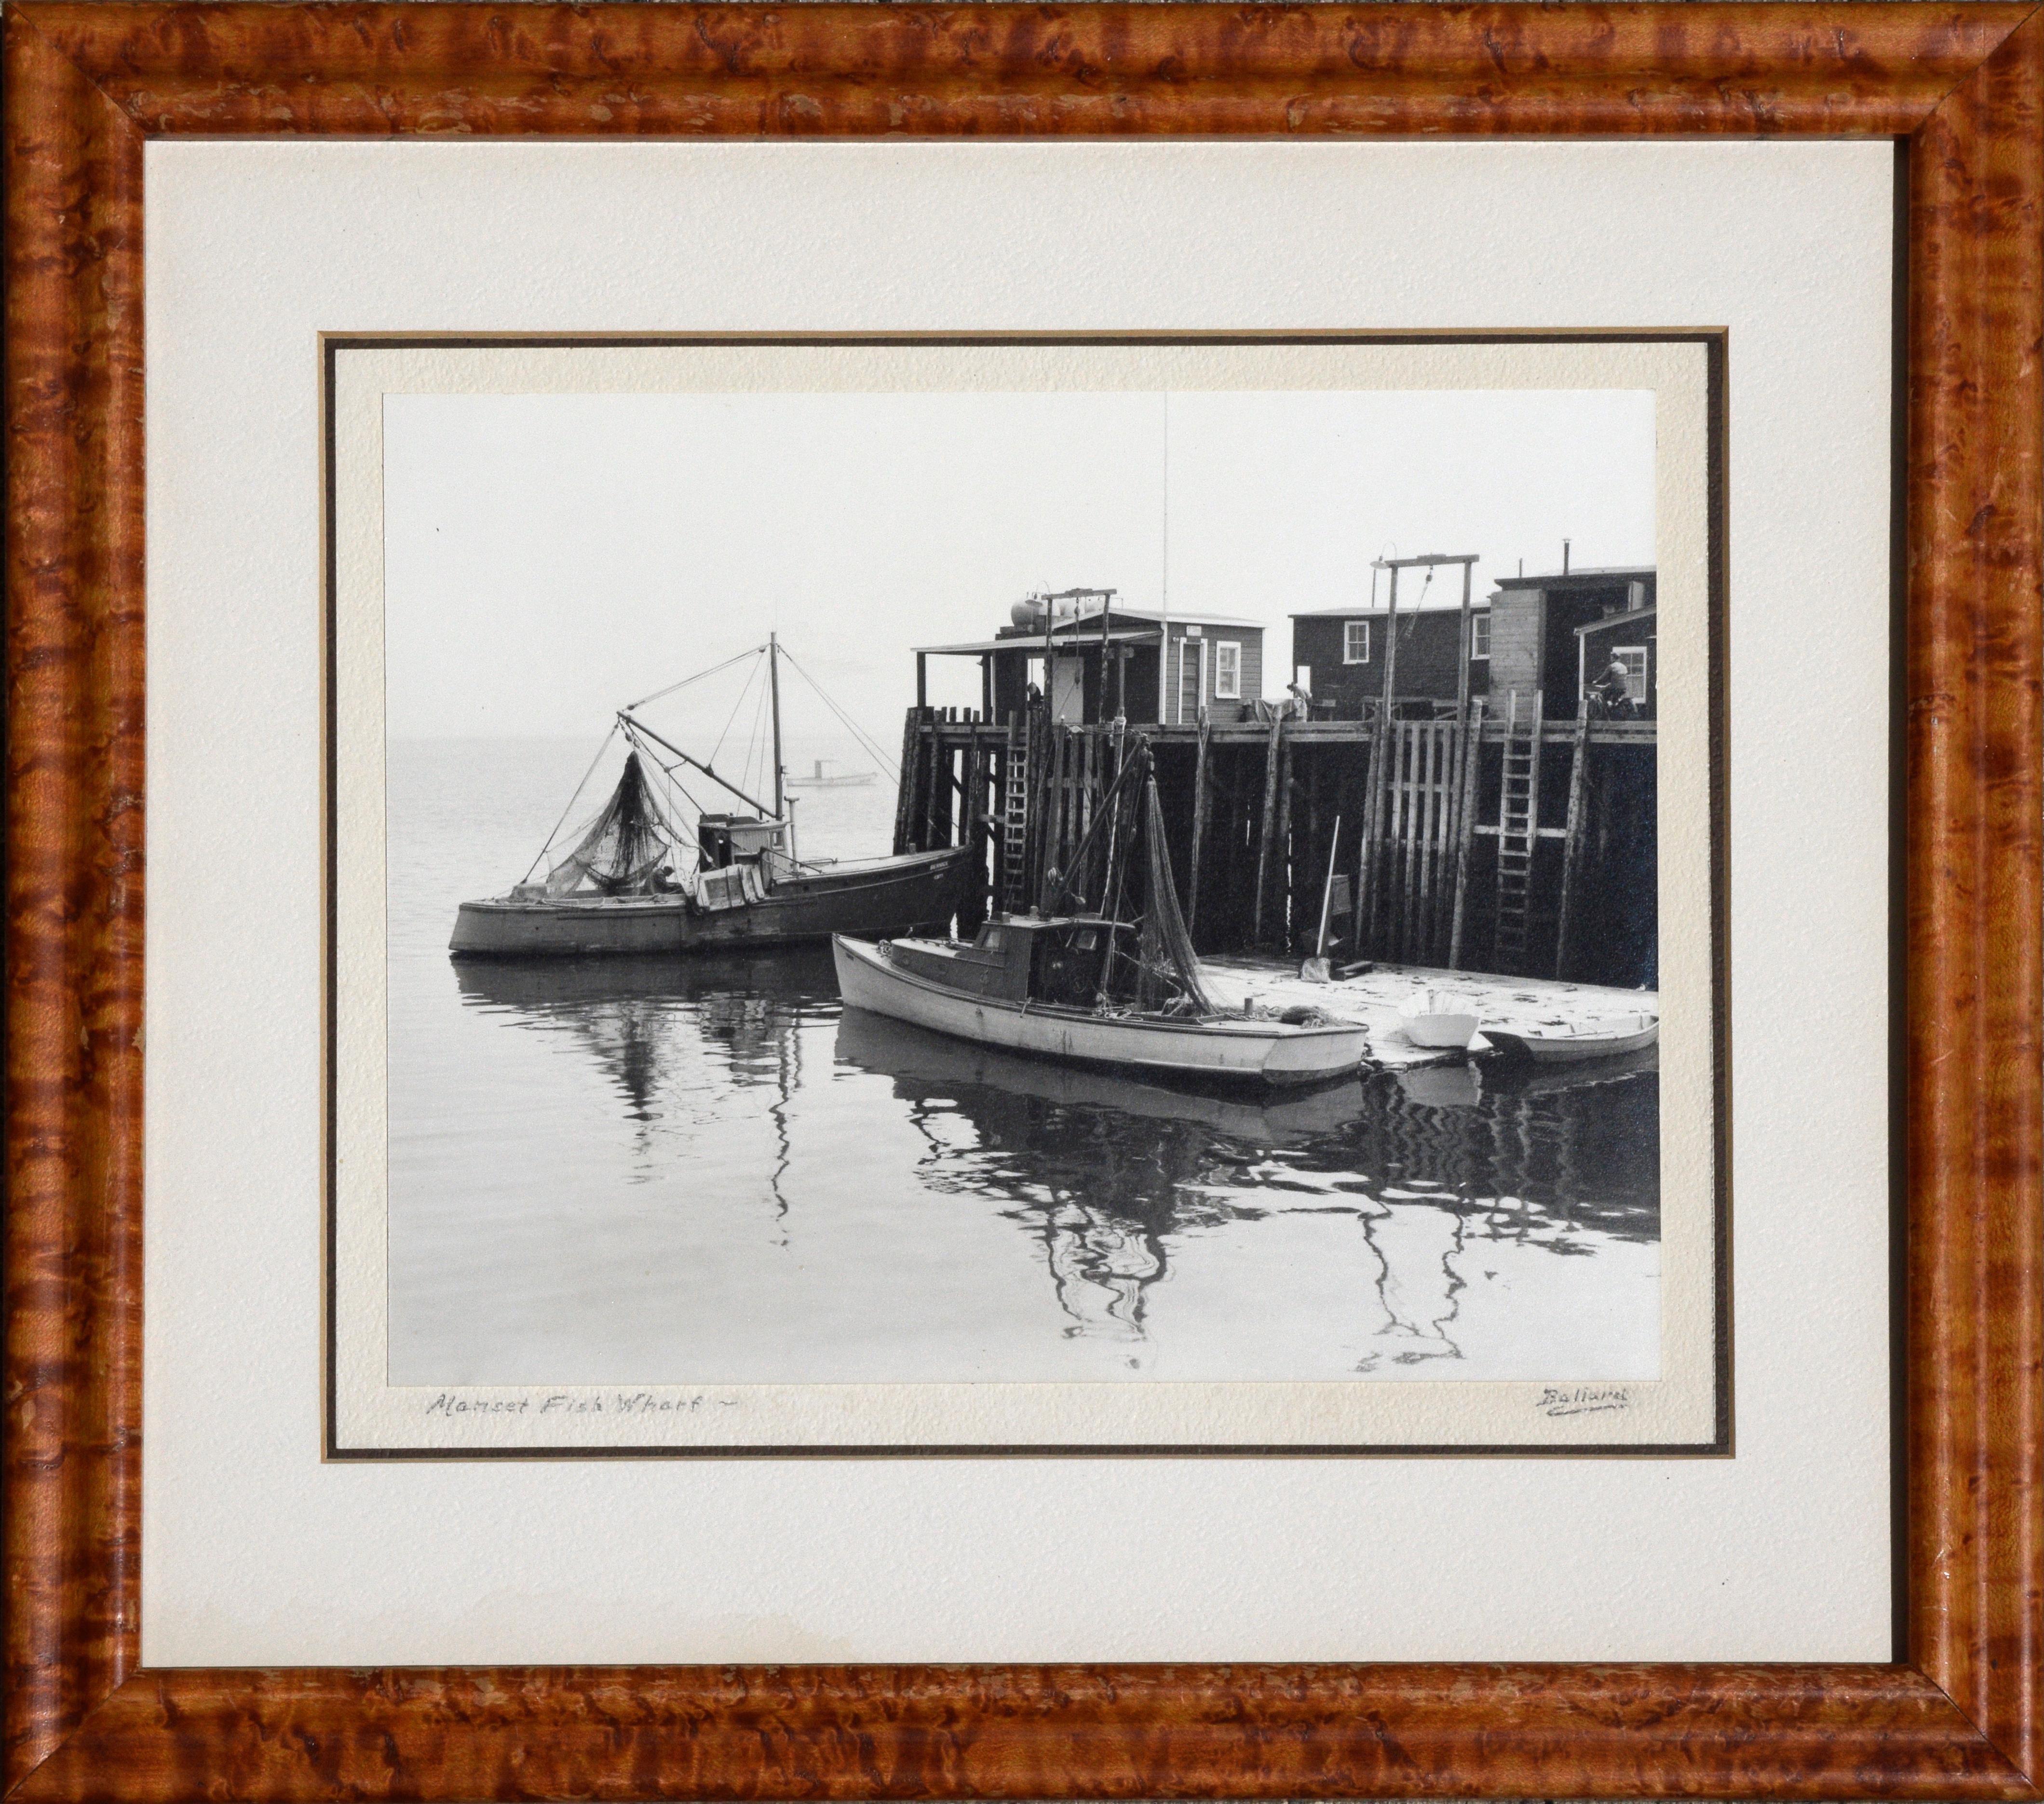 Willis H Ballard Black and White Photograph - Manset Fish Wharf